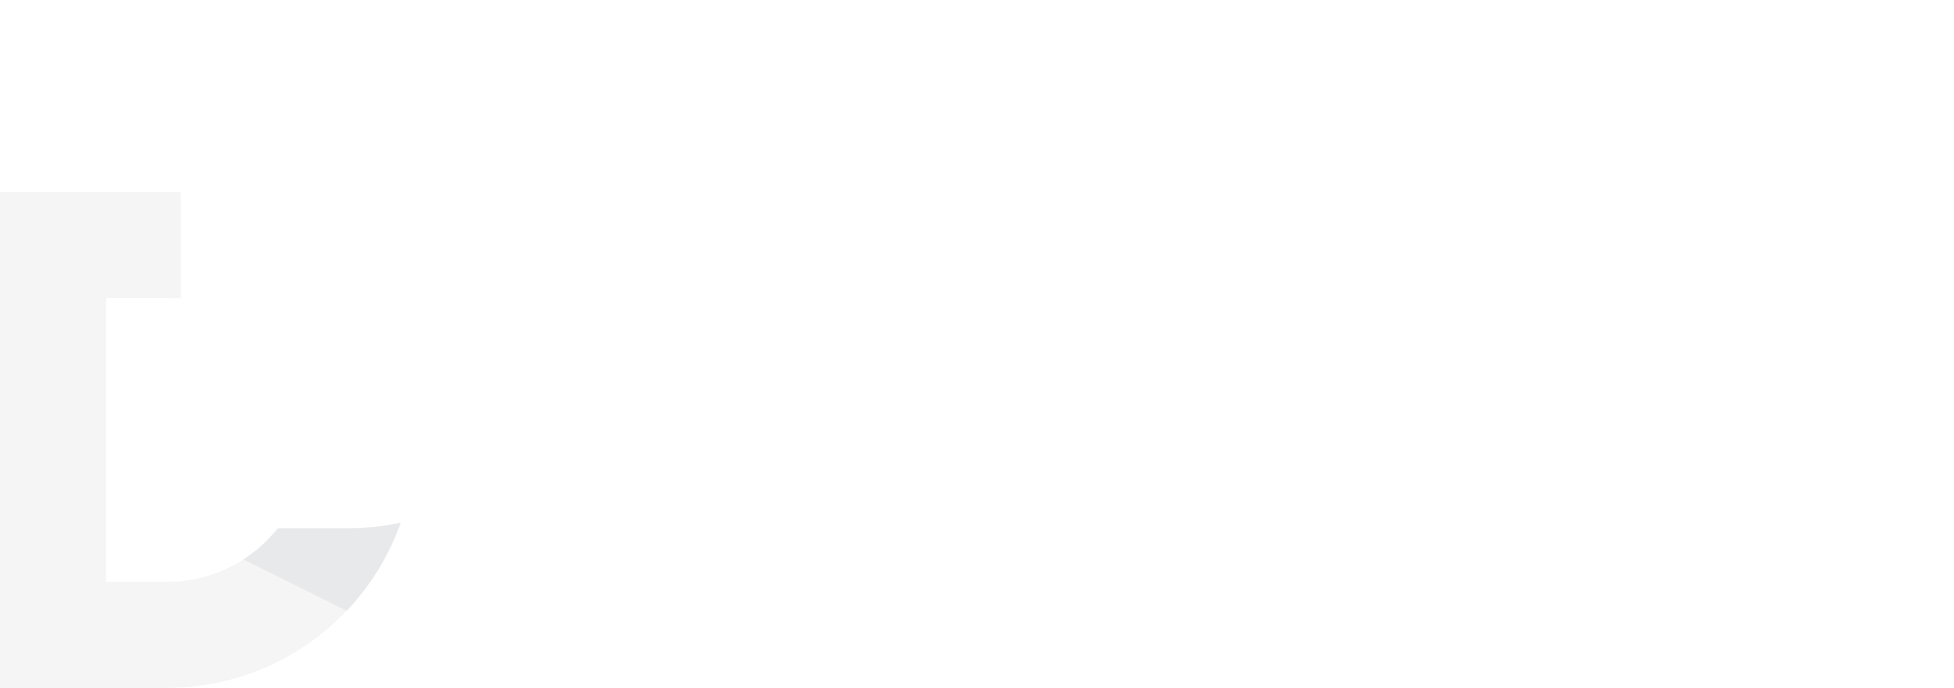 marketing - logo white 2